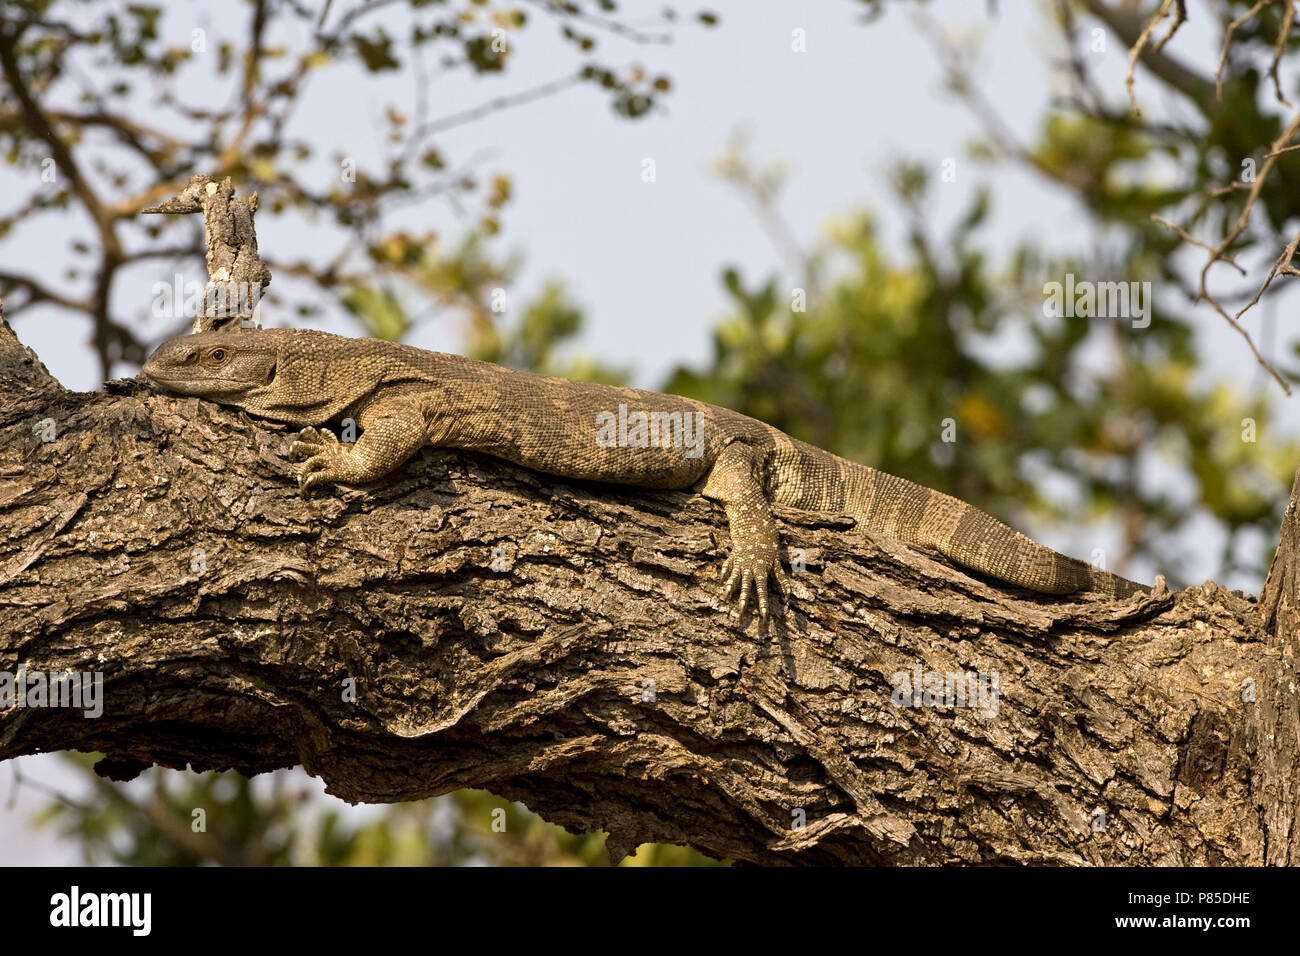 Nijlvaraan op boomtak; Nile Monitor resting on large branch Stock Photo